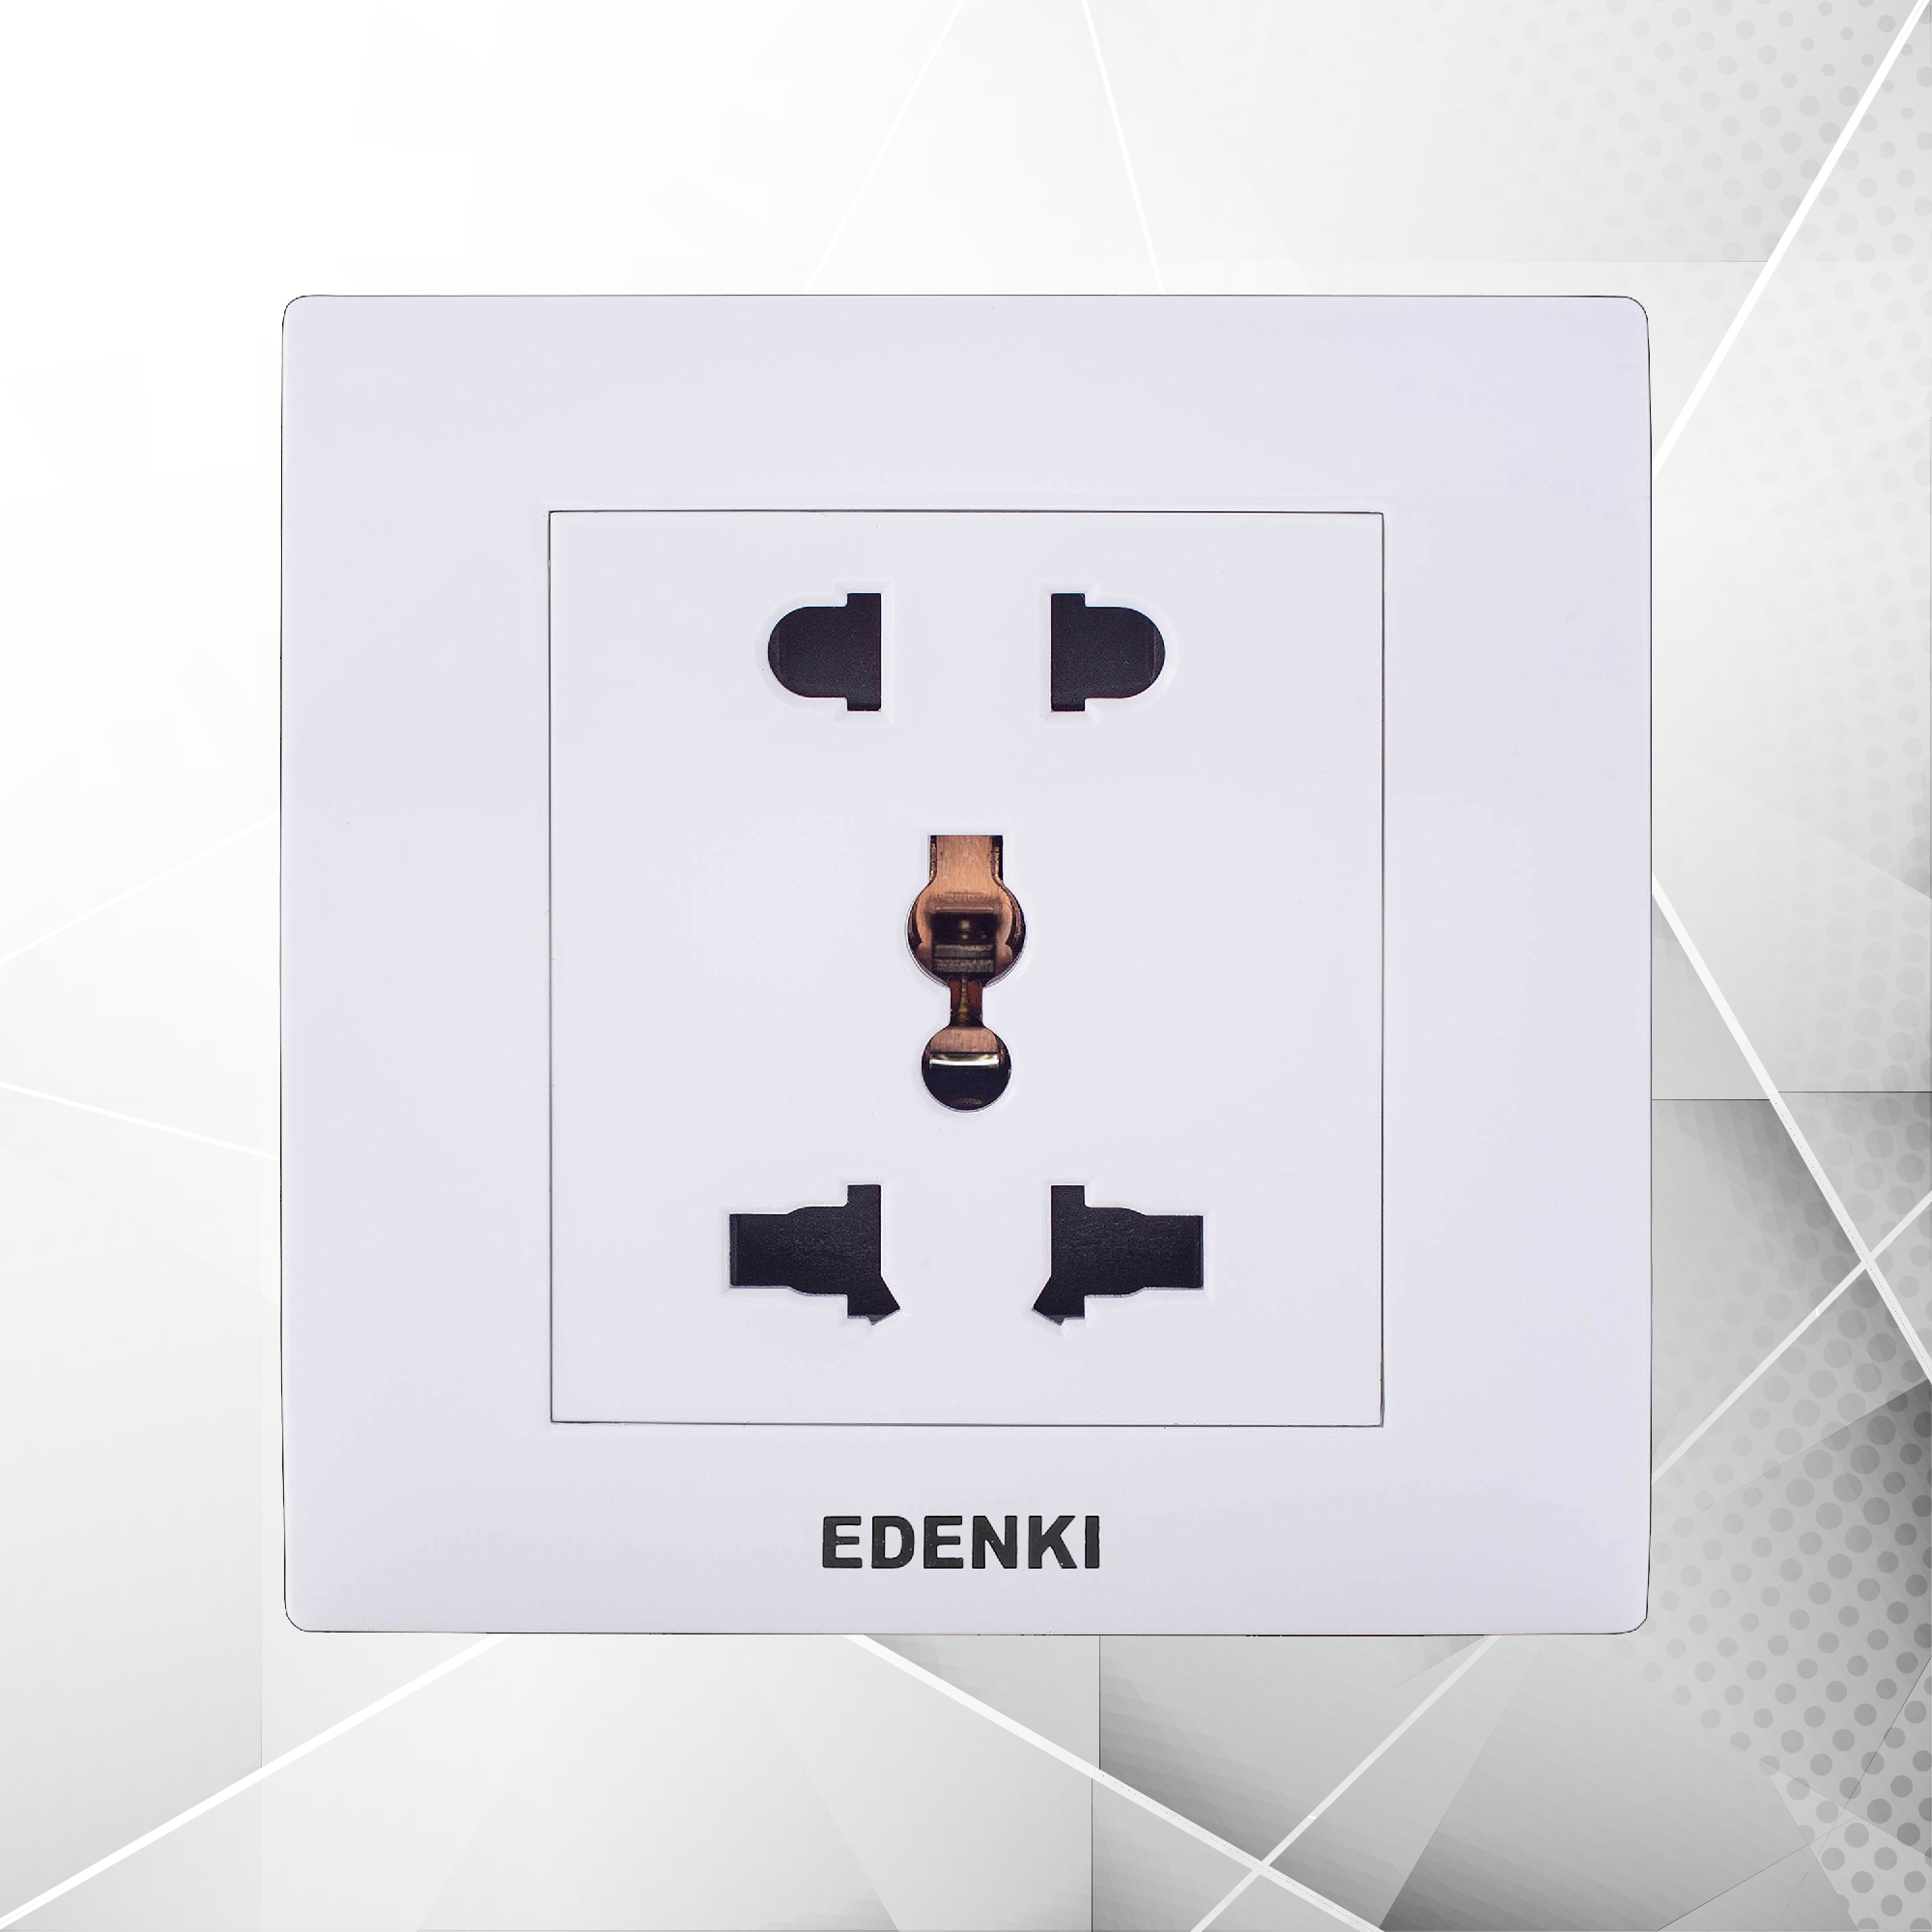 Bộ ổ cắm đôi 3 chấu Edenki EE-005